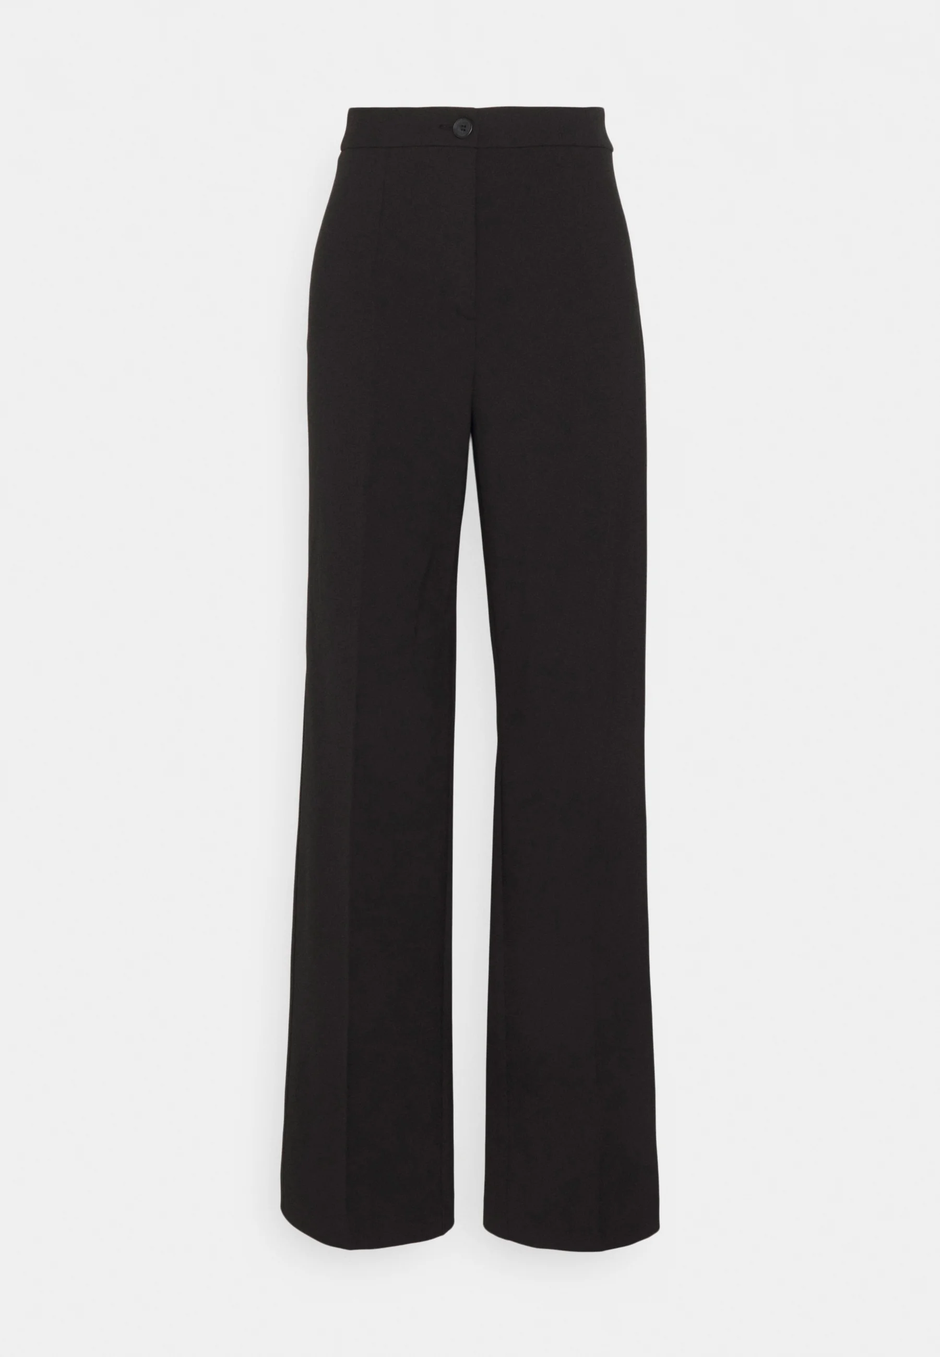 Foto: Vero Moda/ Zalando, duge crne hlače (27,99 eura) | Autor: 